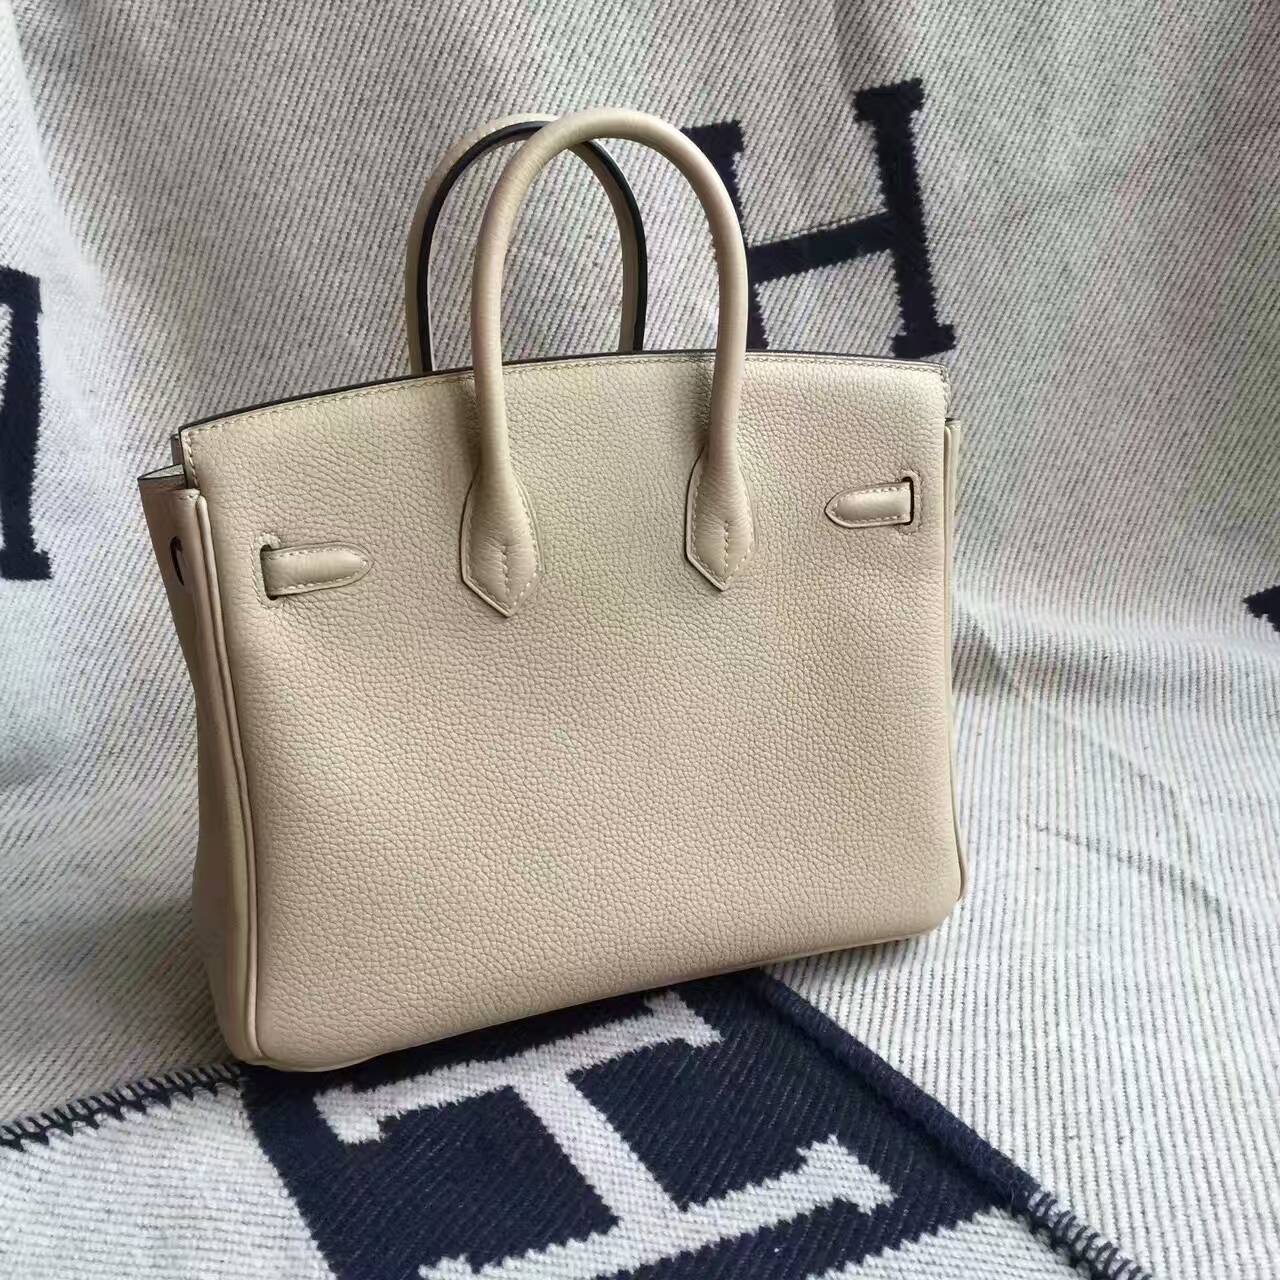 Wholesale Hermes Togo Calskin Leather Birkin25cm Handbag in S2 Coat ...